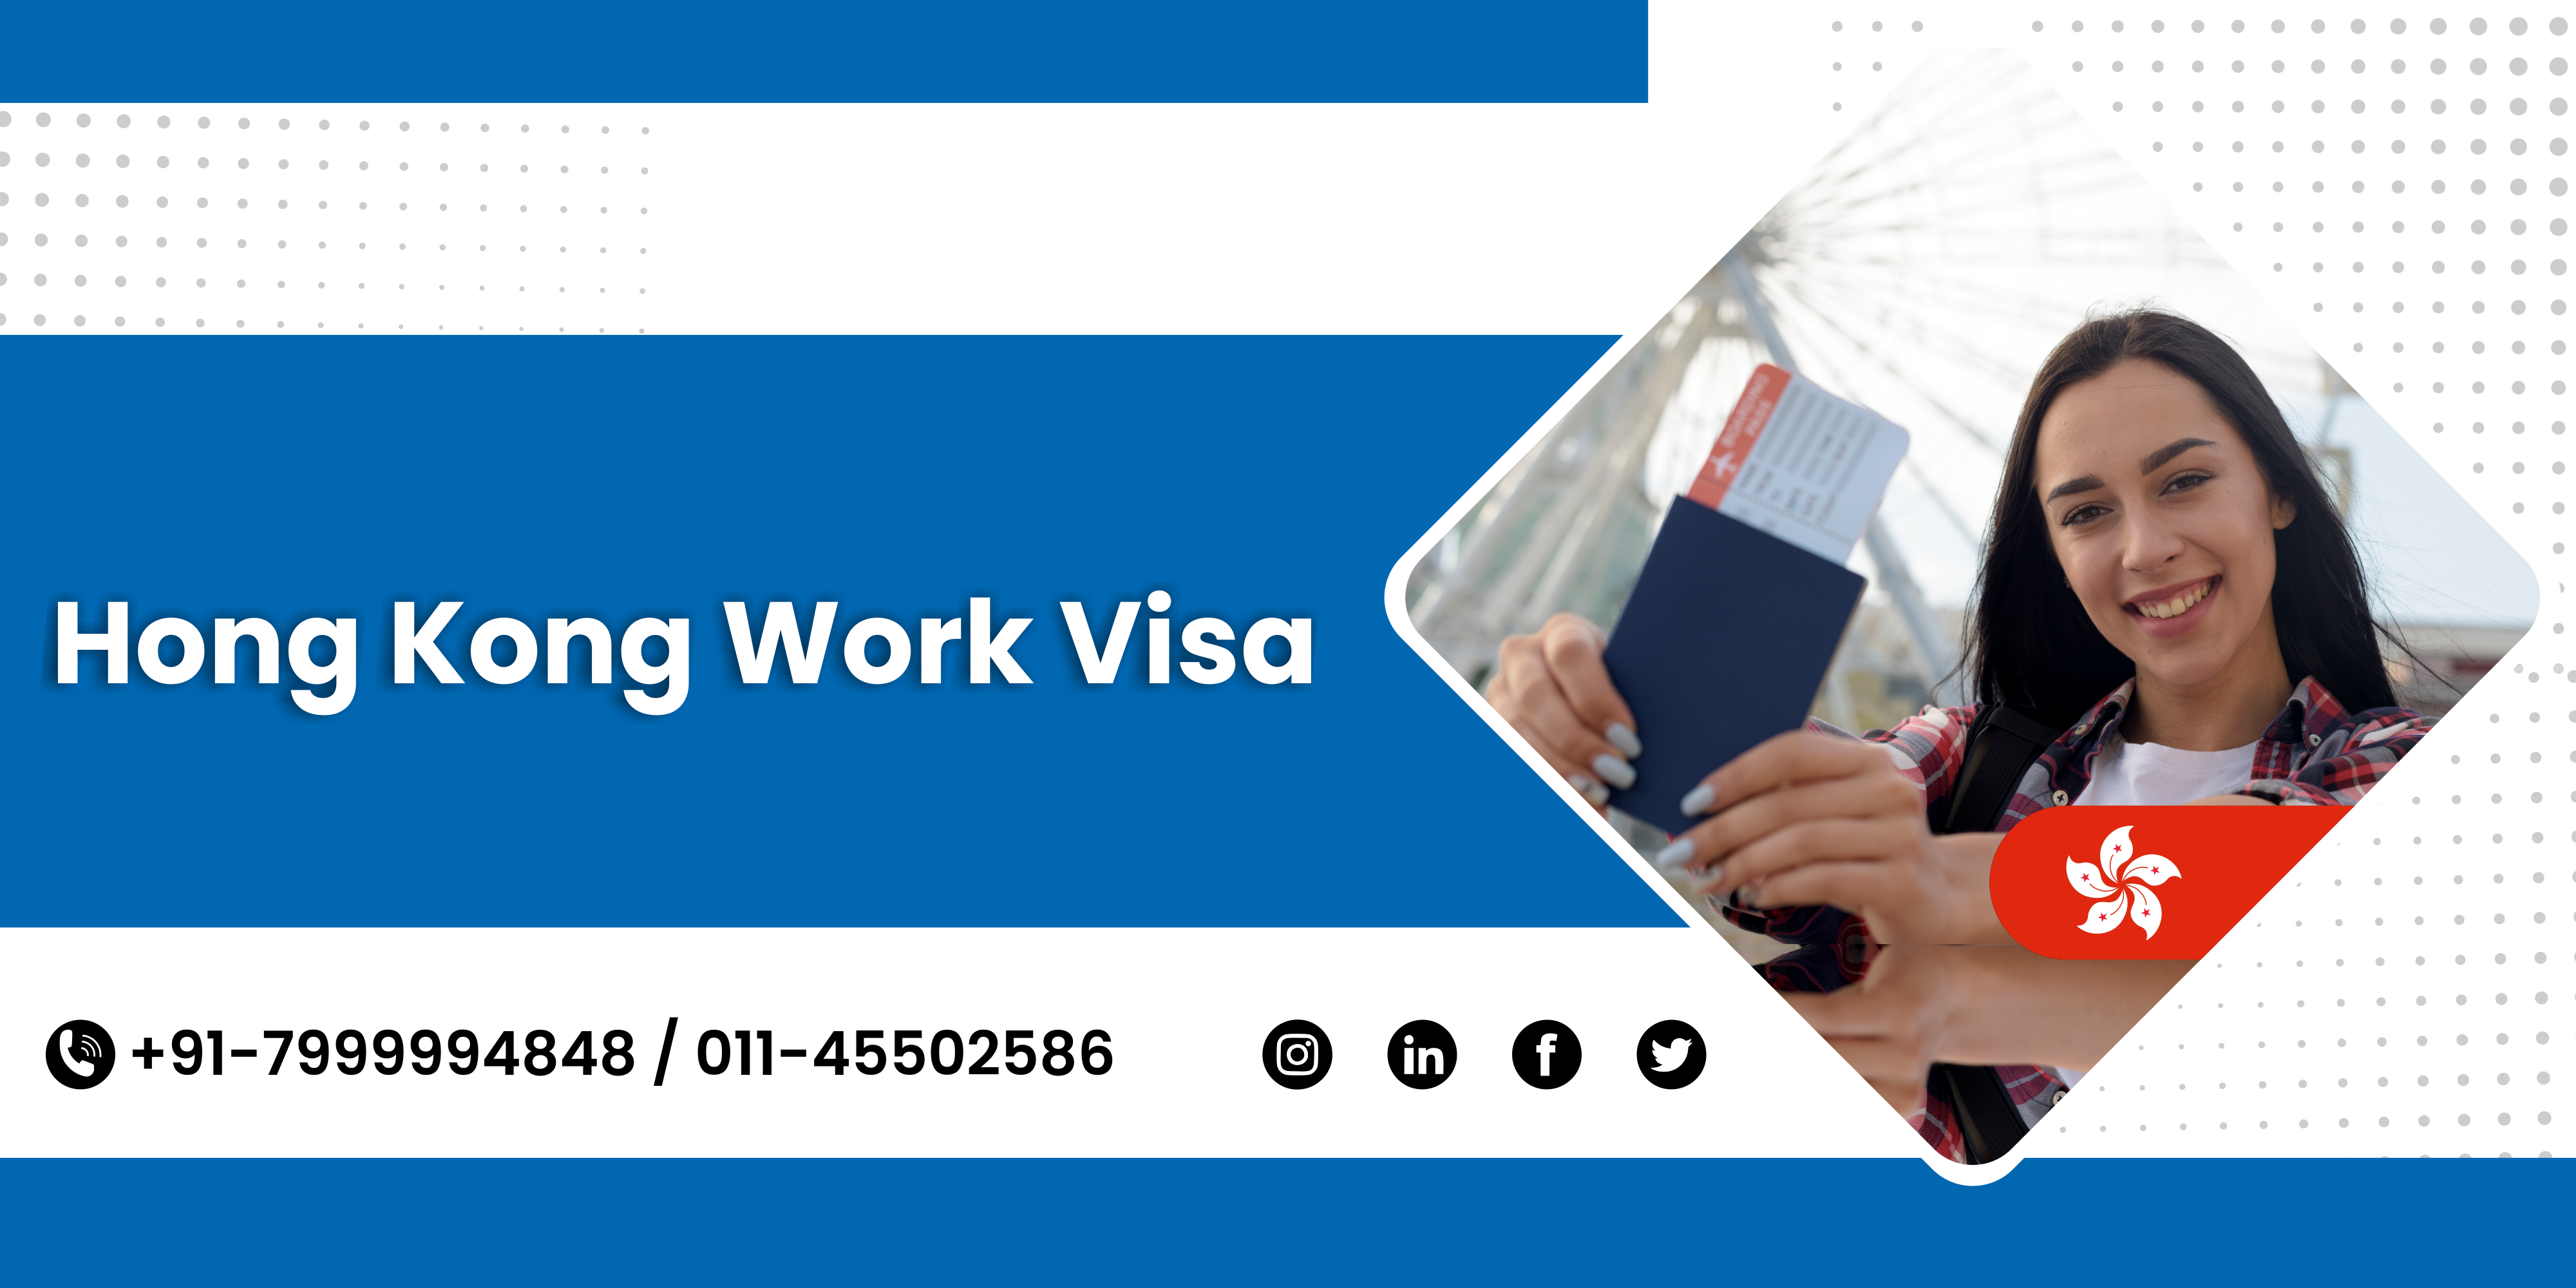 Hong Kong Work Visa